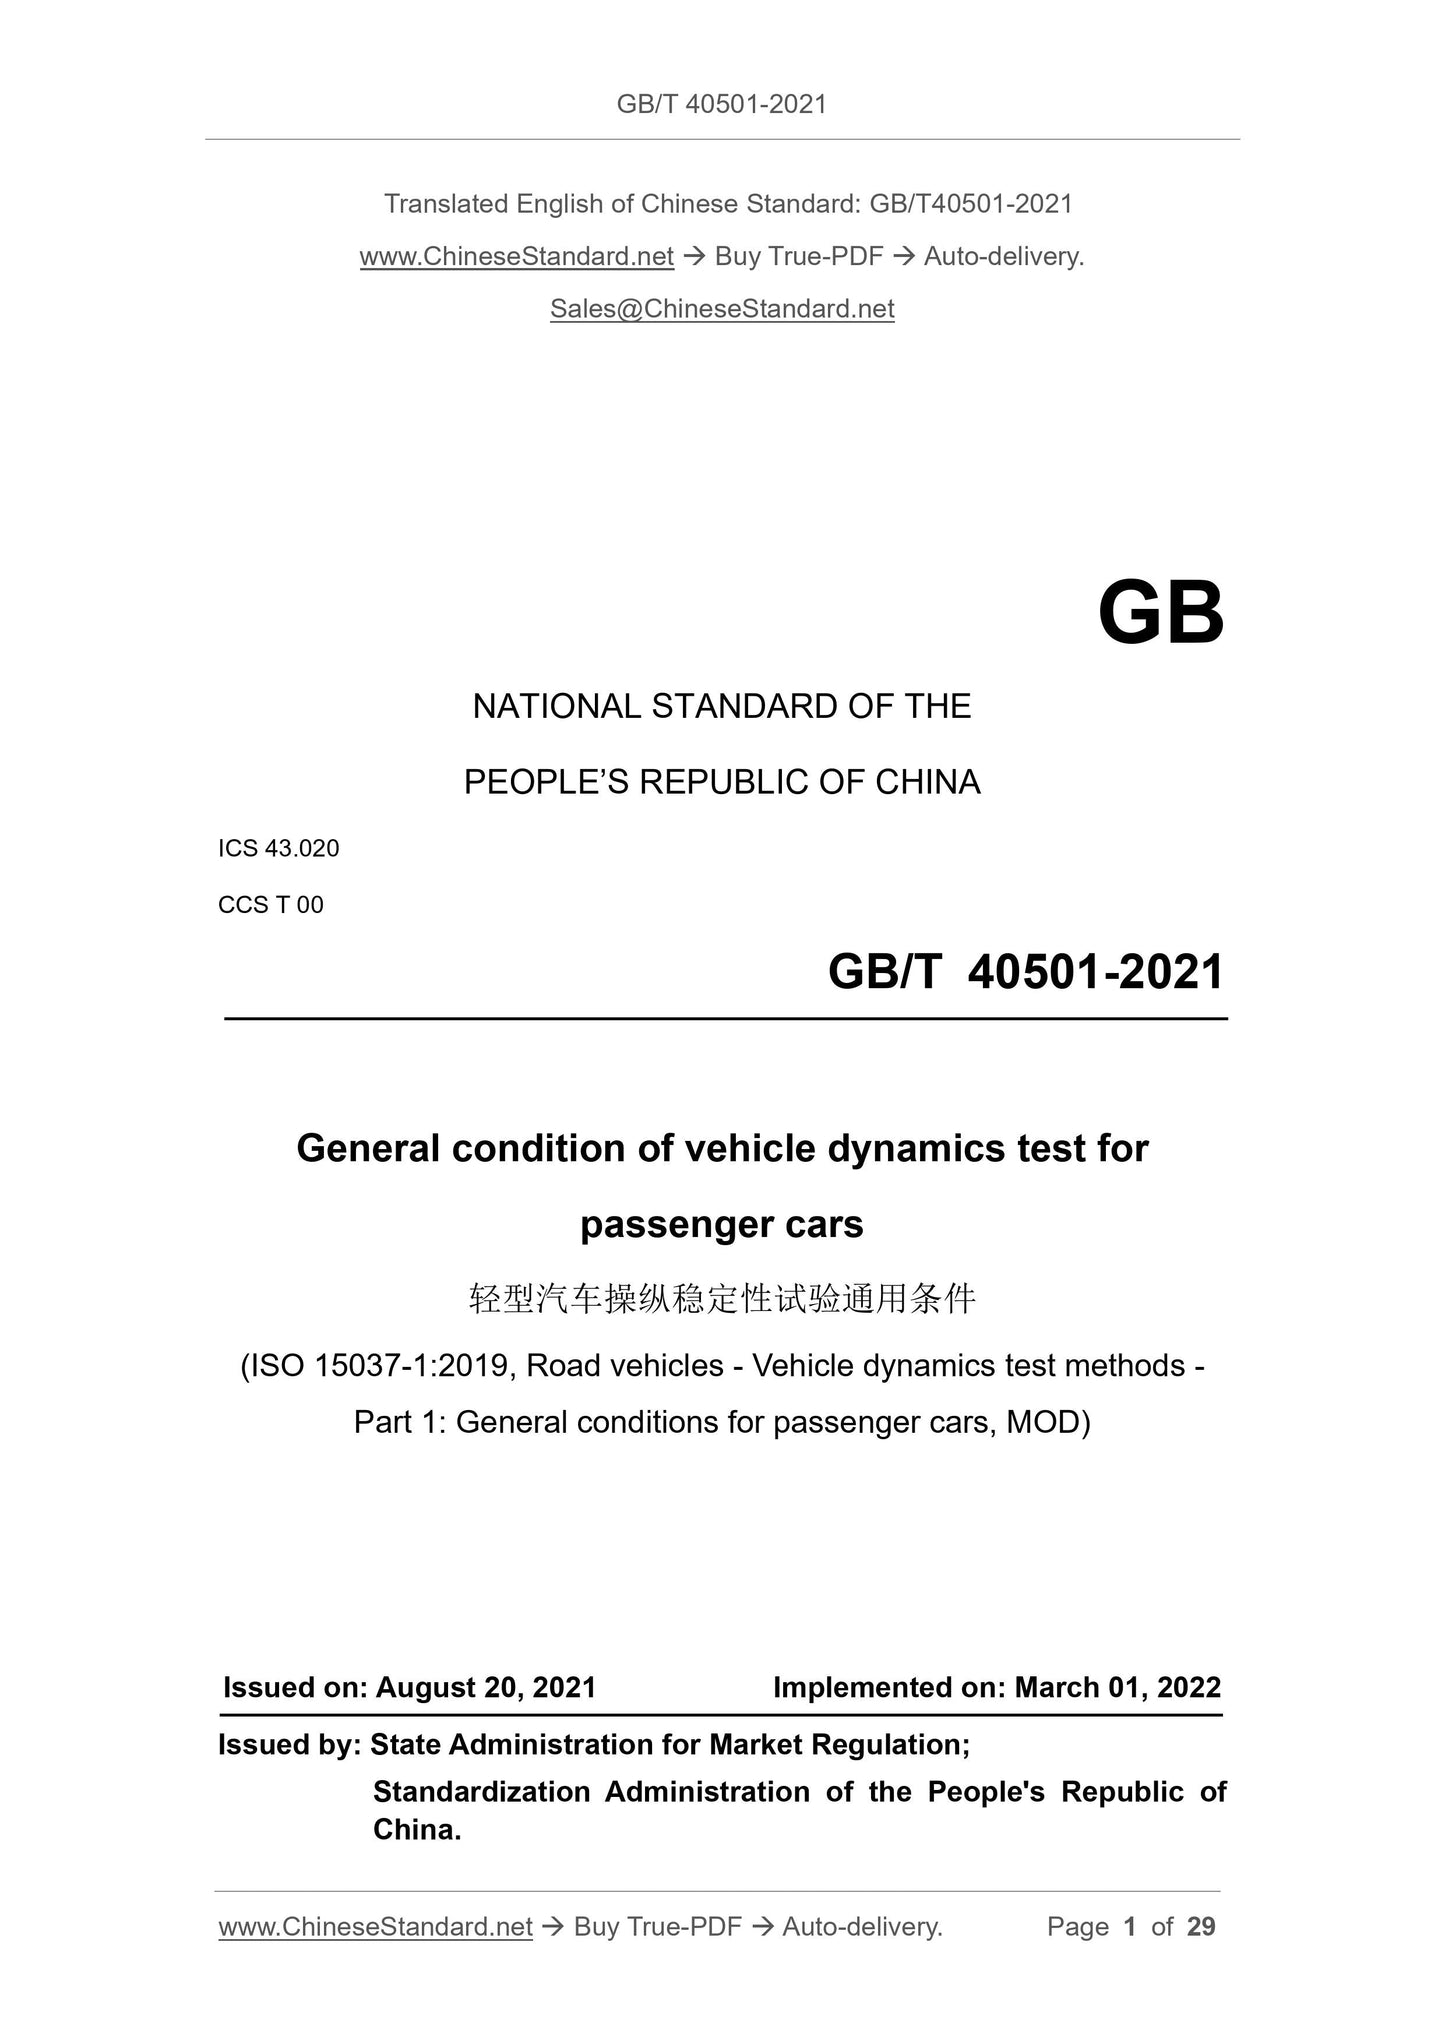 GBT40501-2021 Page 1